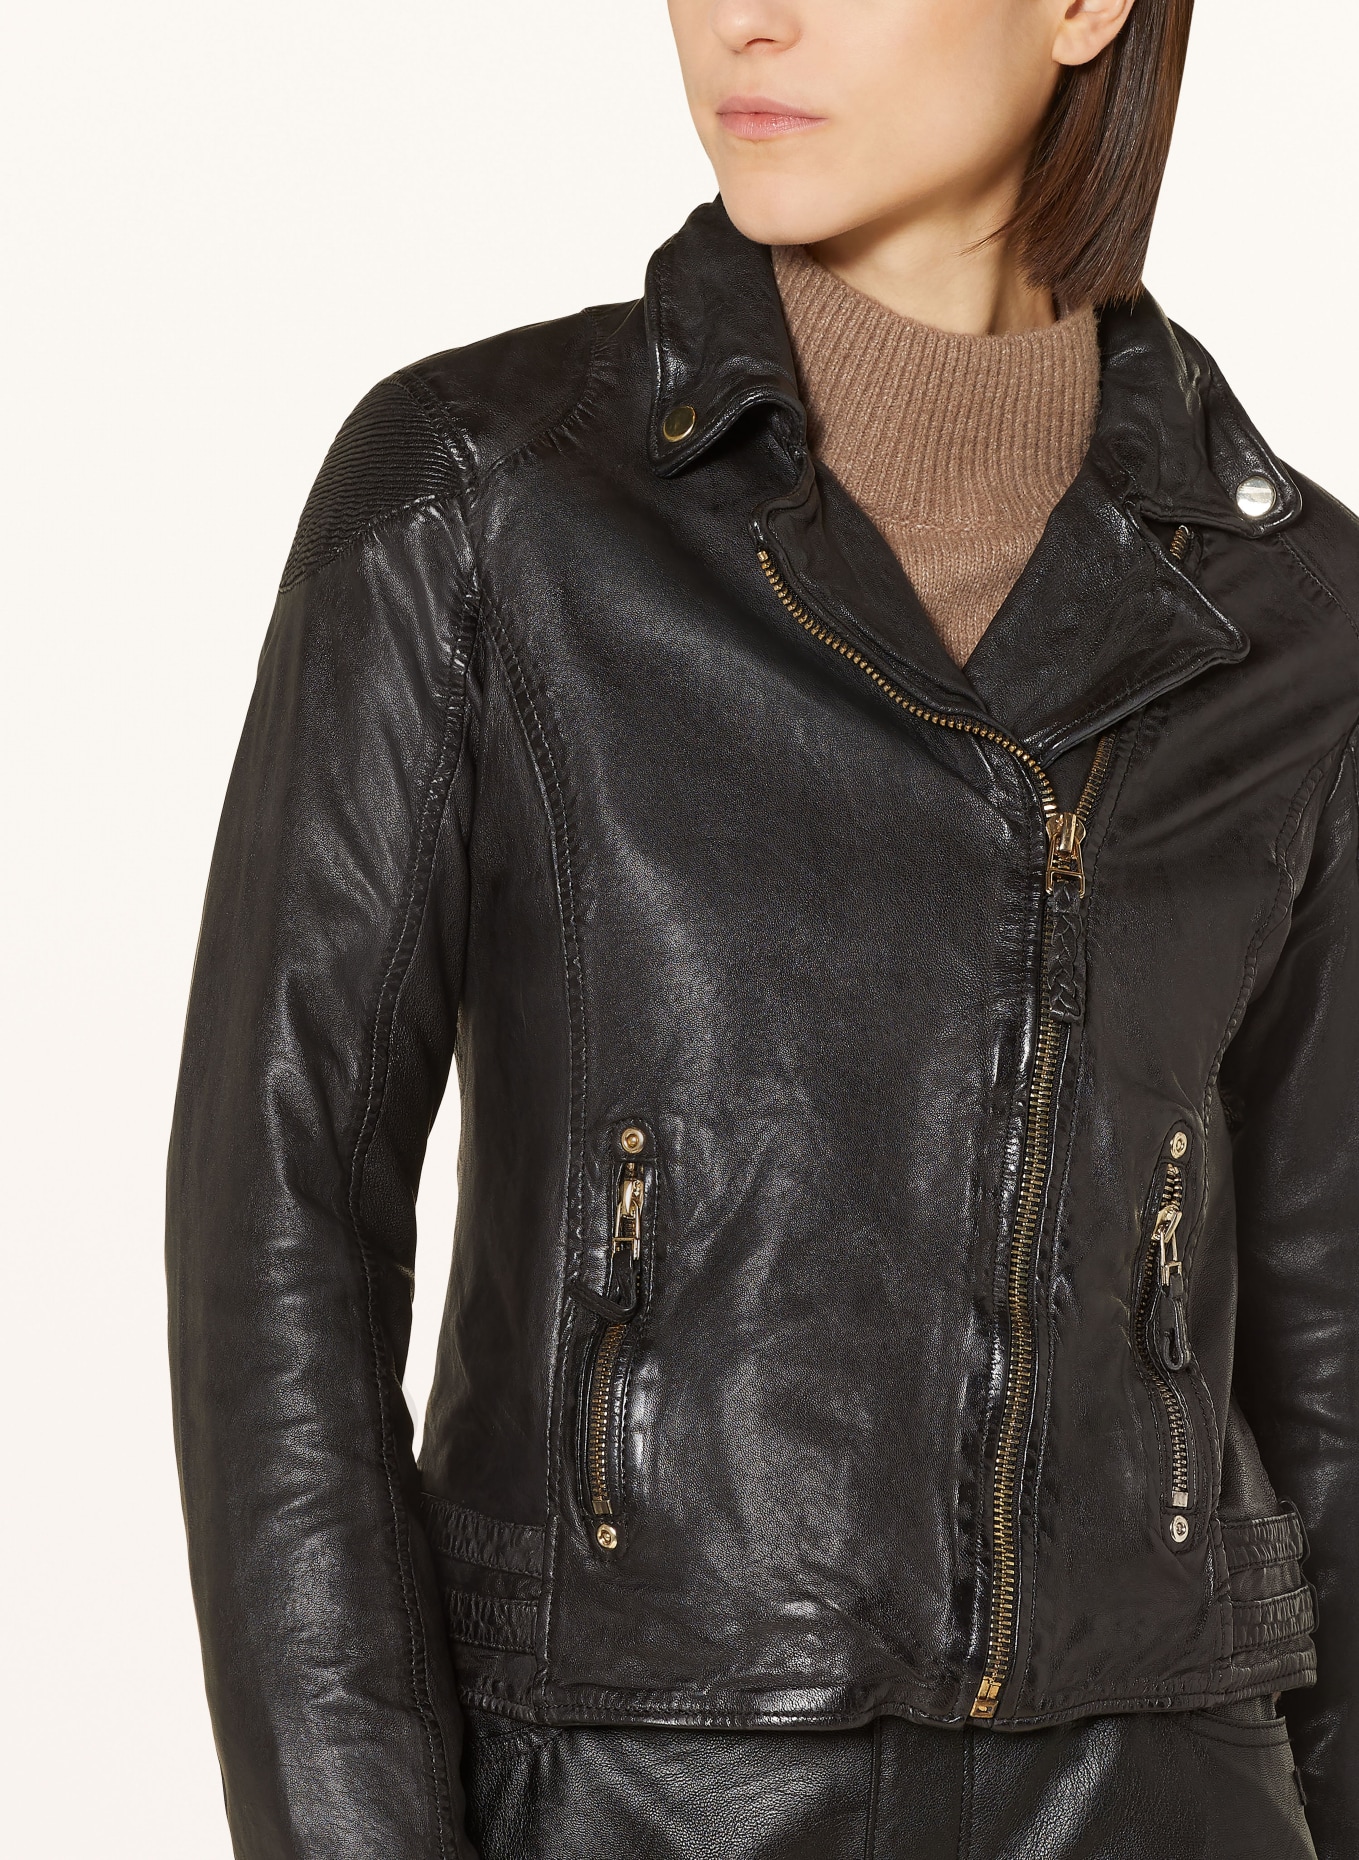 GWANETA black gipsy jacket in Leather